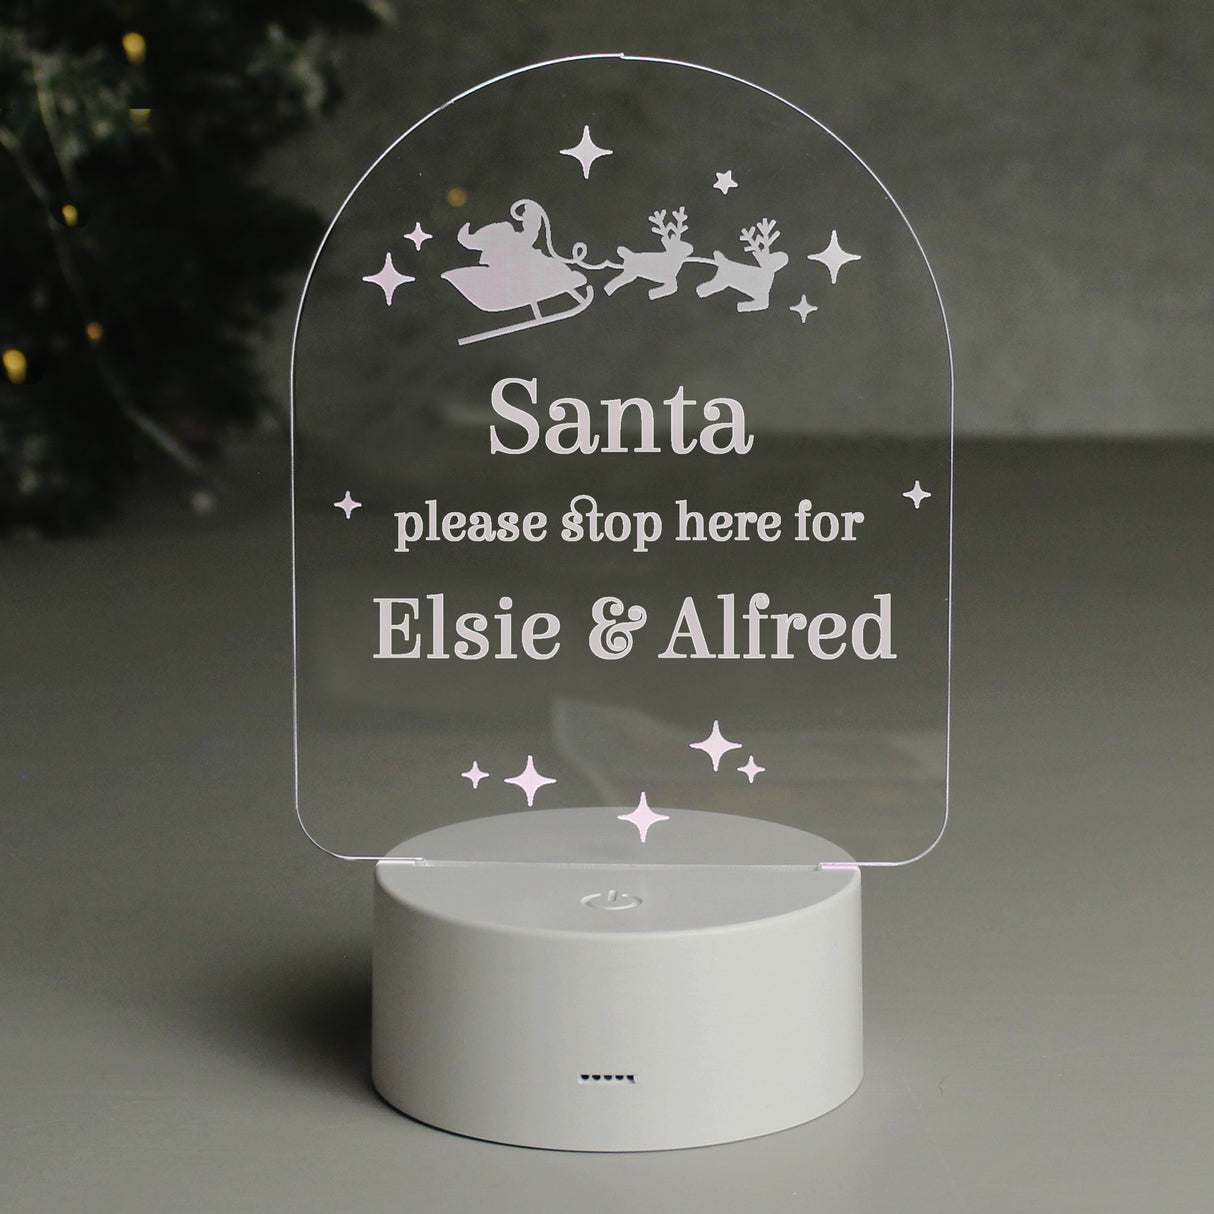 Free Text Christmas LED Light - Gift Moments